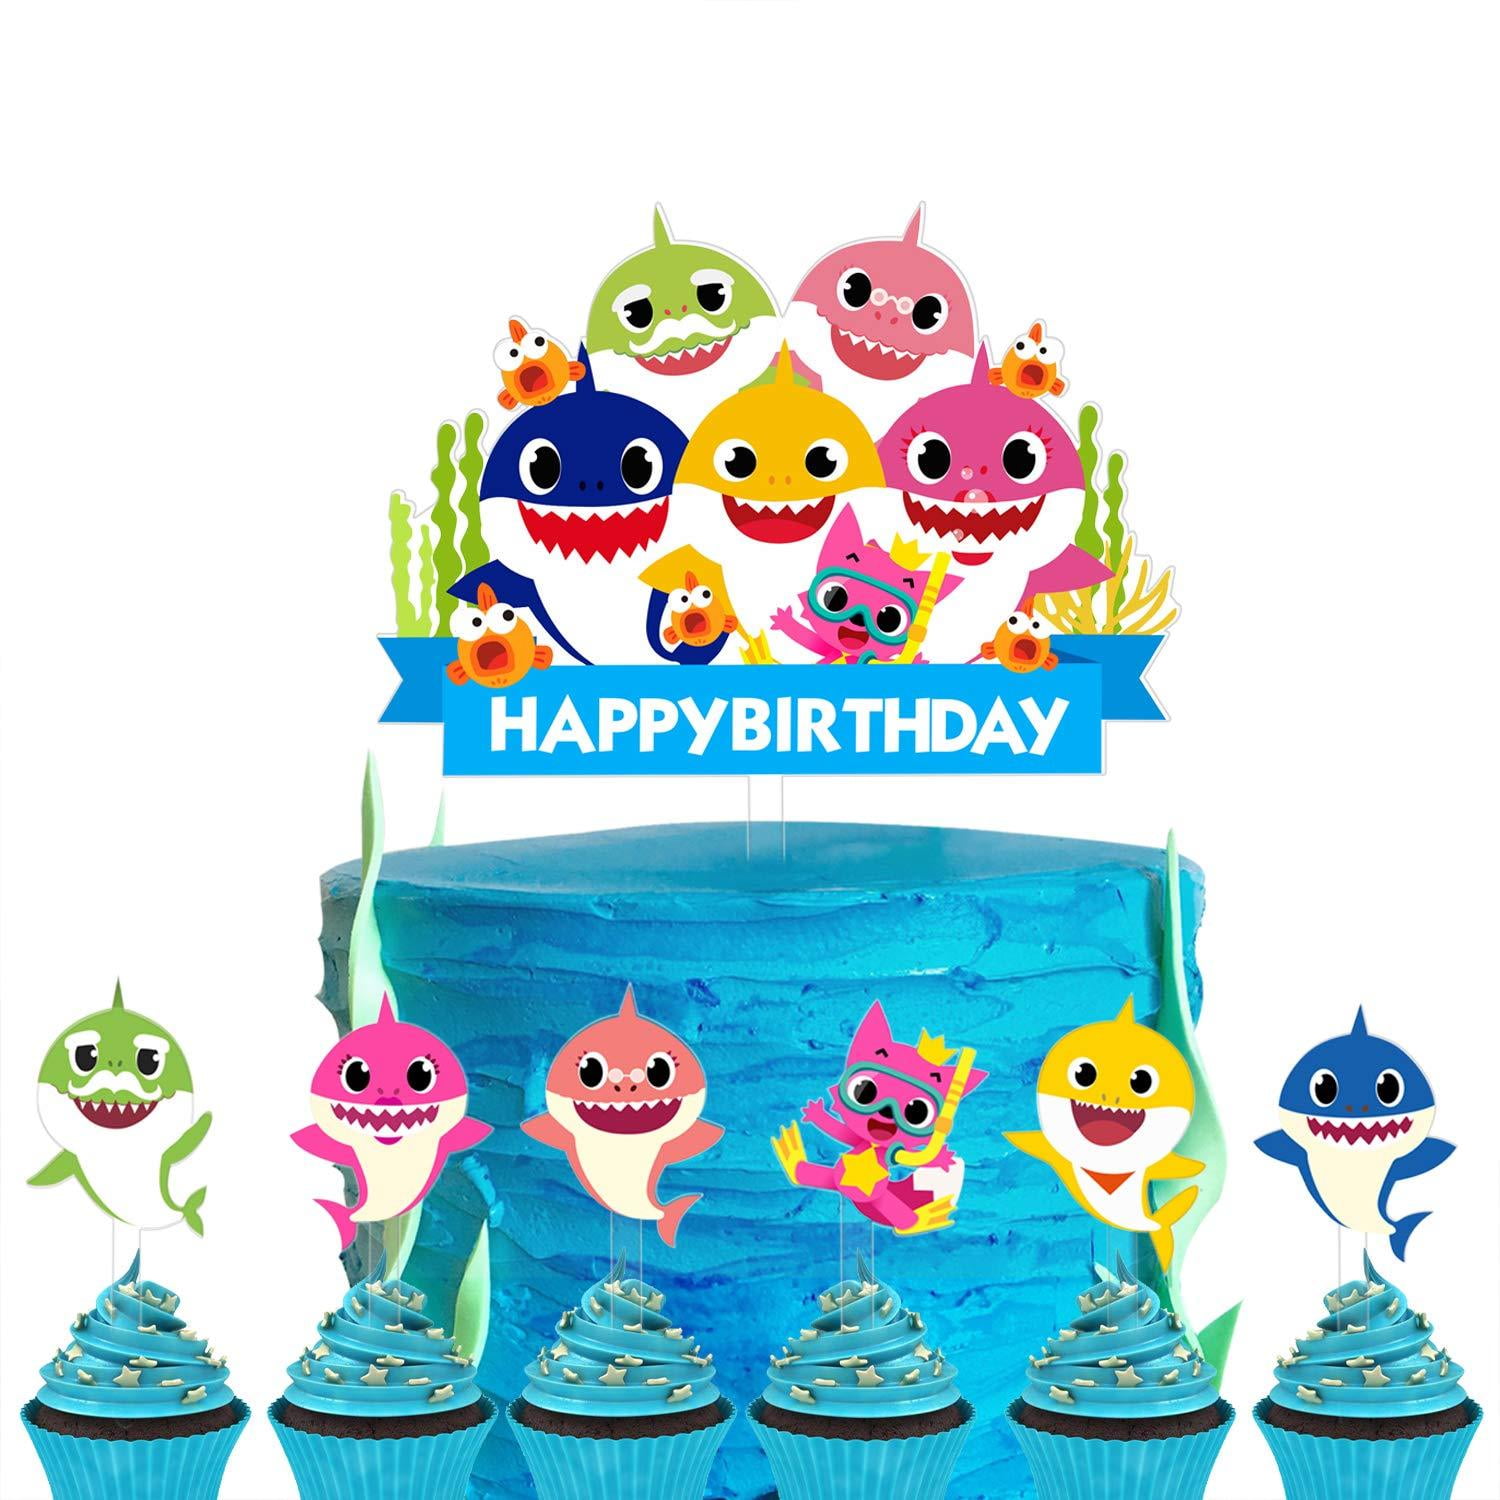 Acrylic  Happy Birthday Cake Topper Cupcake Dessert Party Decor SuppliesAUAU